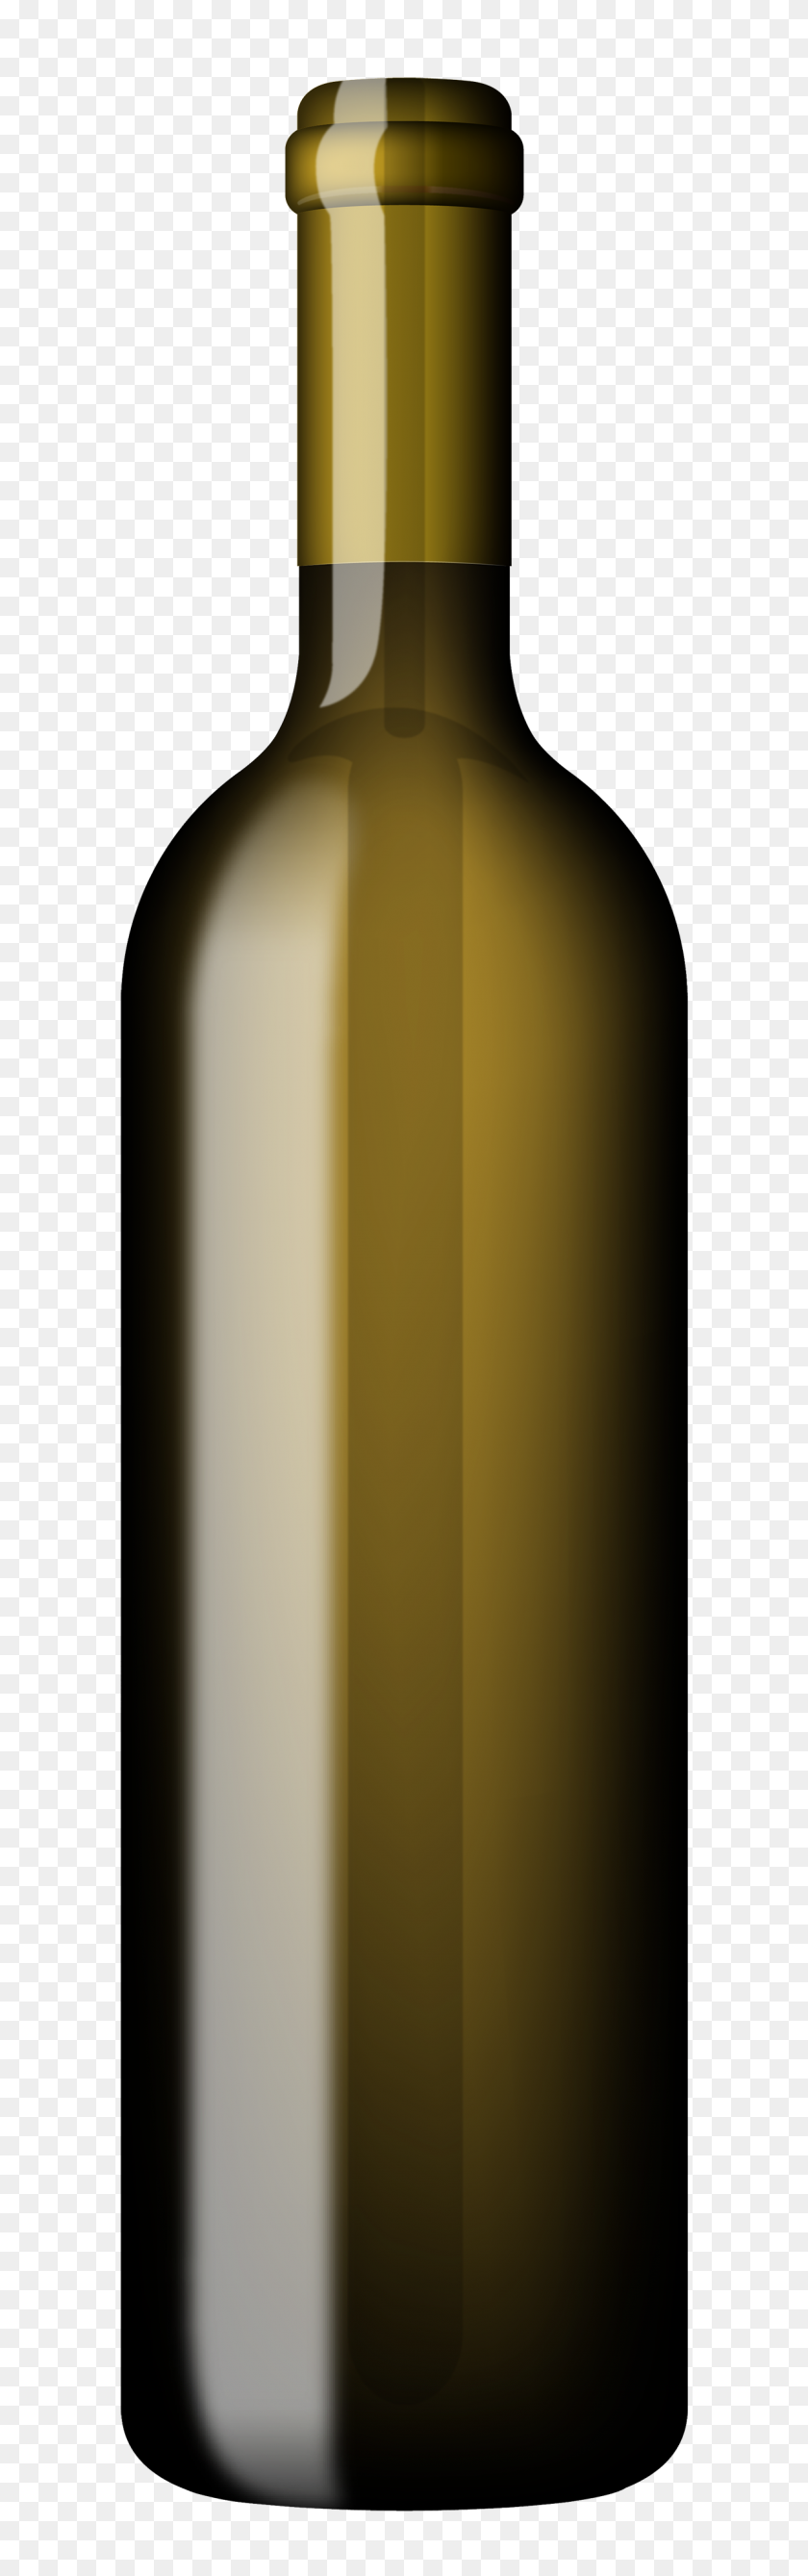 Green Bottle Of Wine Png Clipart - Wine Bottle PNG - FlyClipart